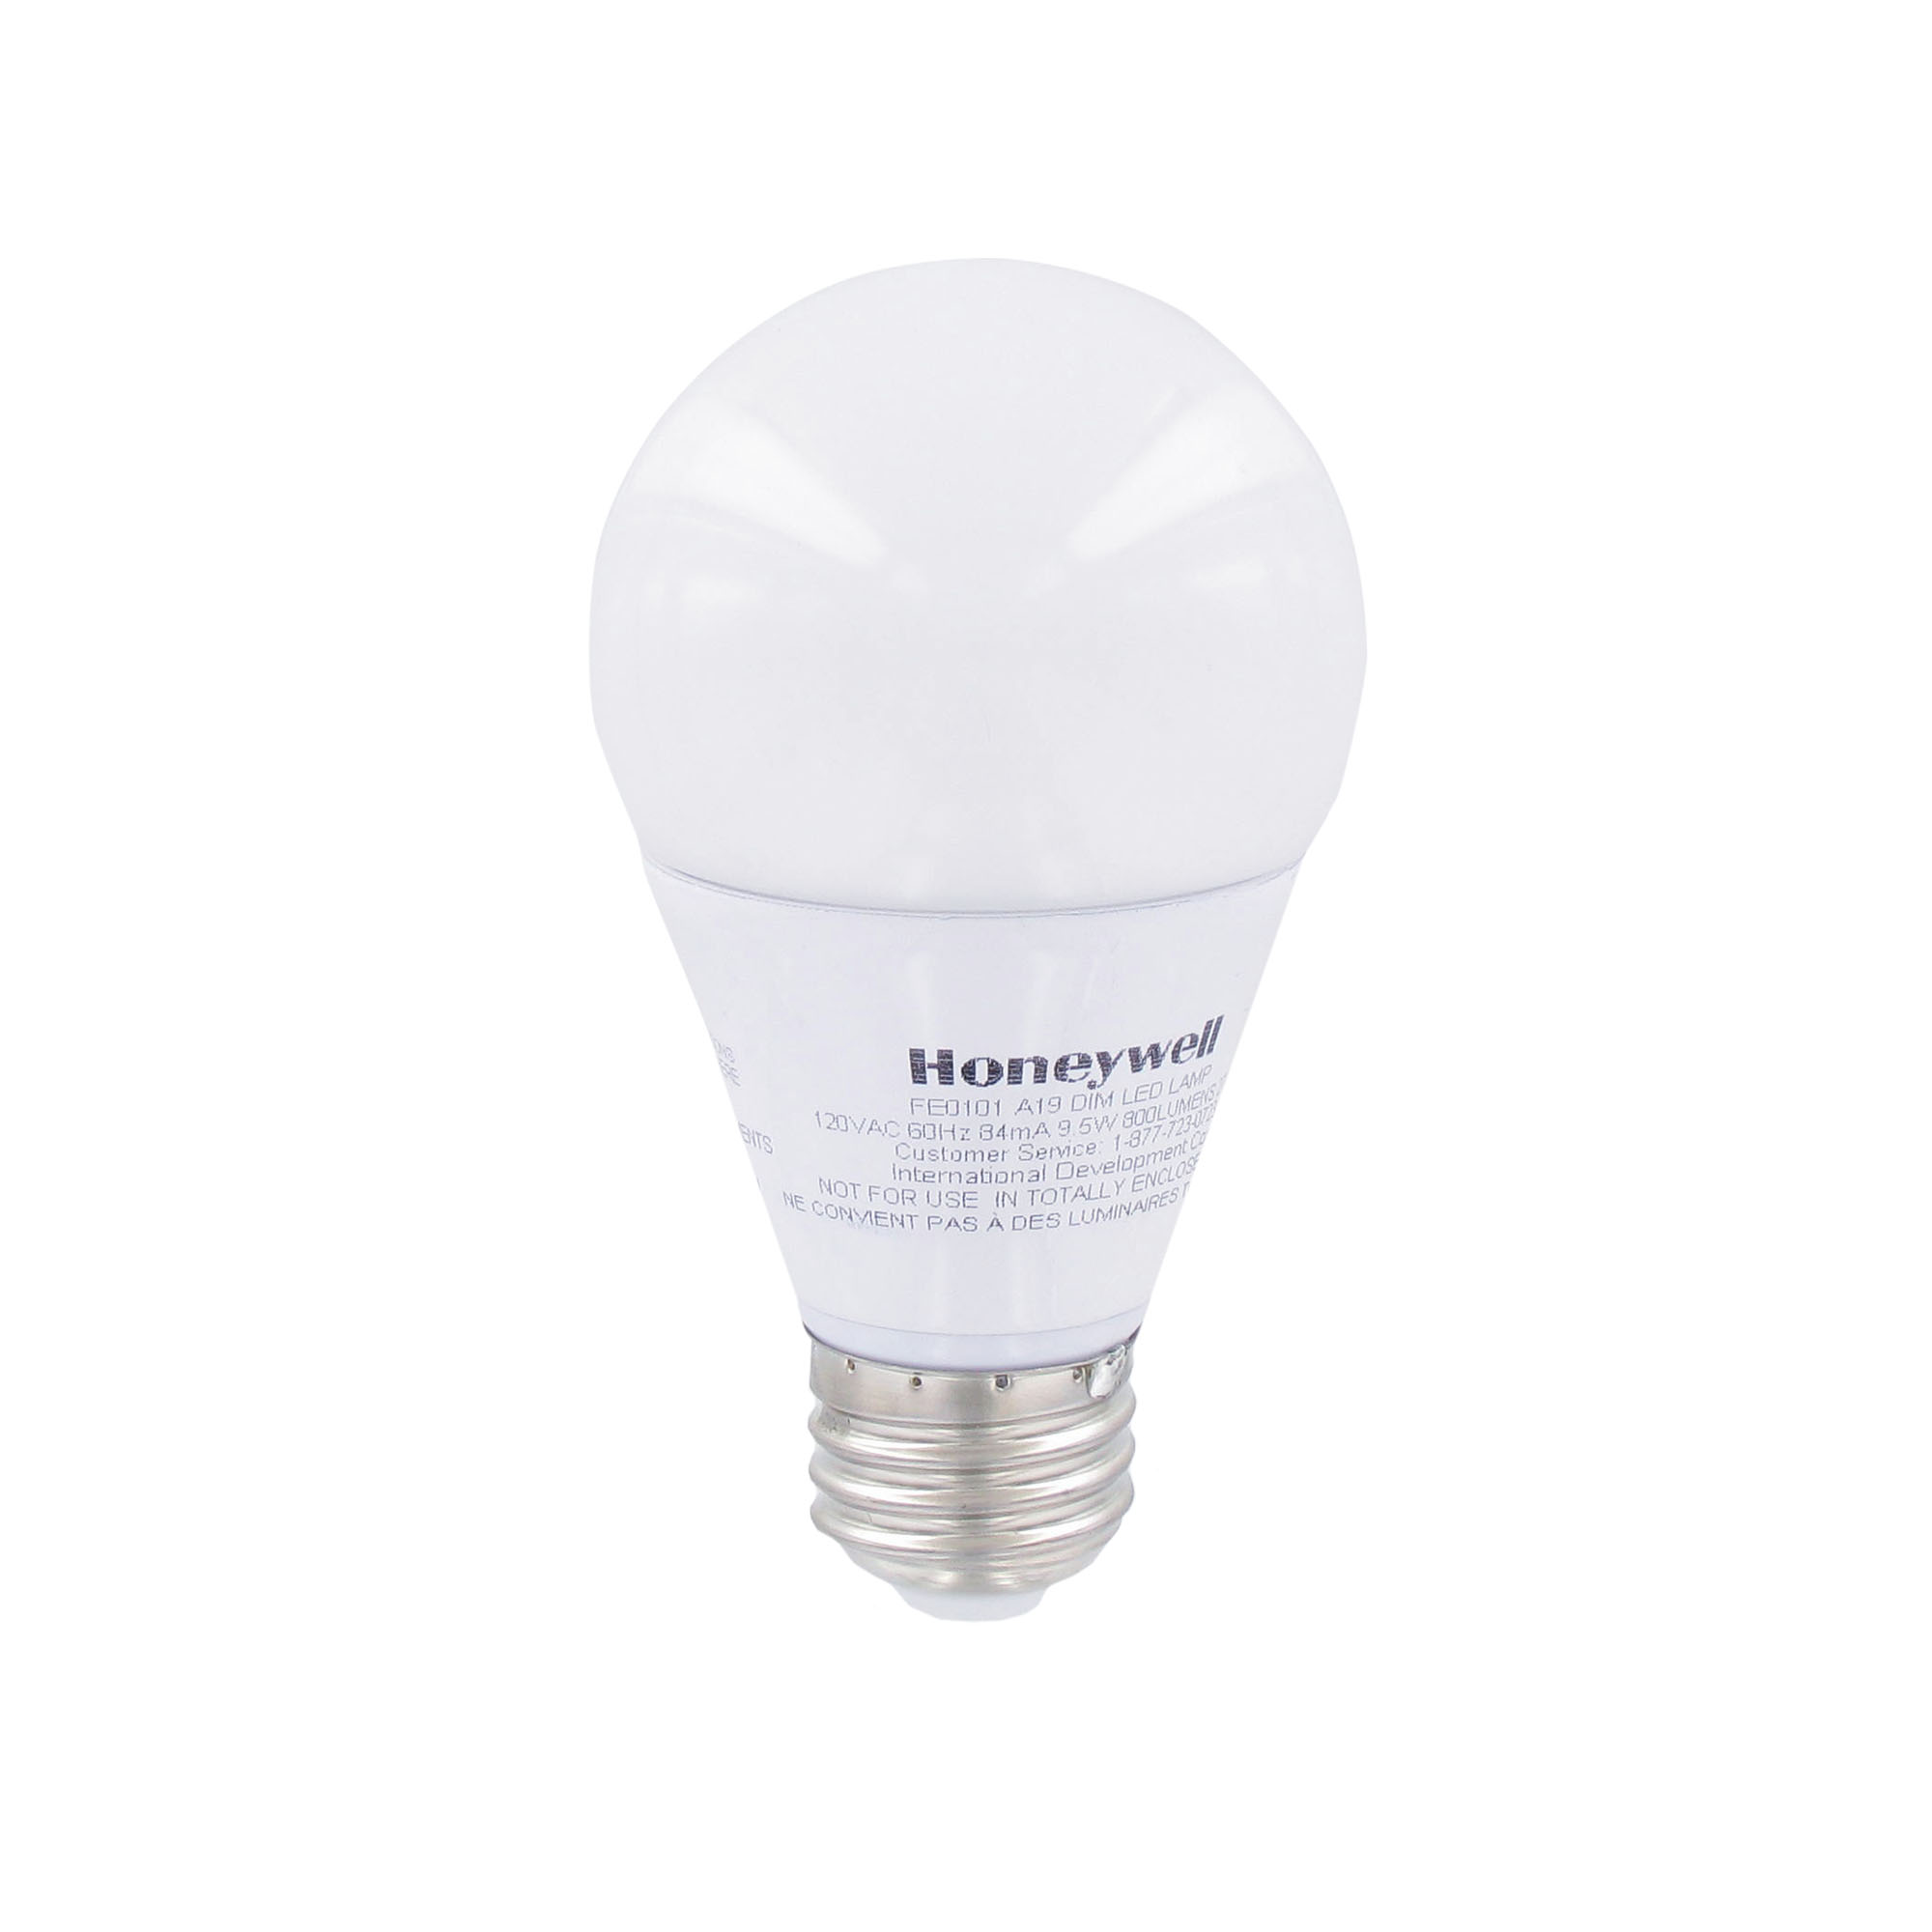 Honeywell LED Light Bulbs